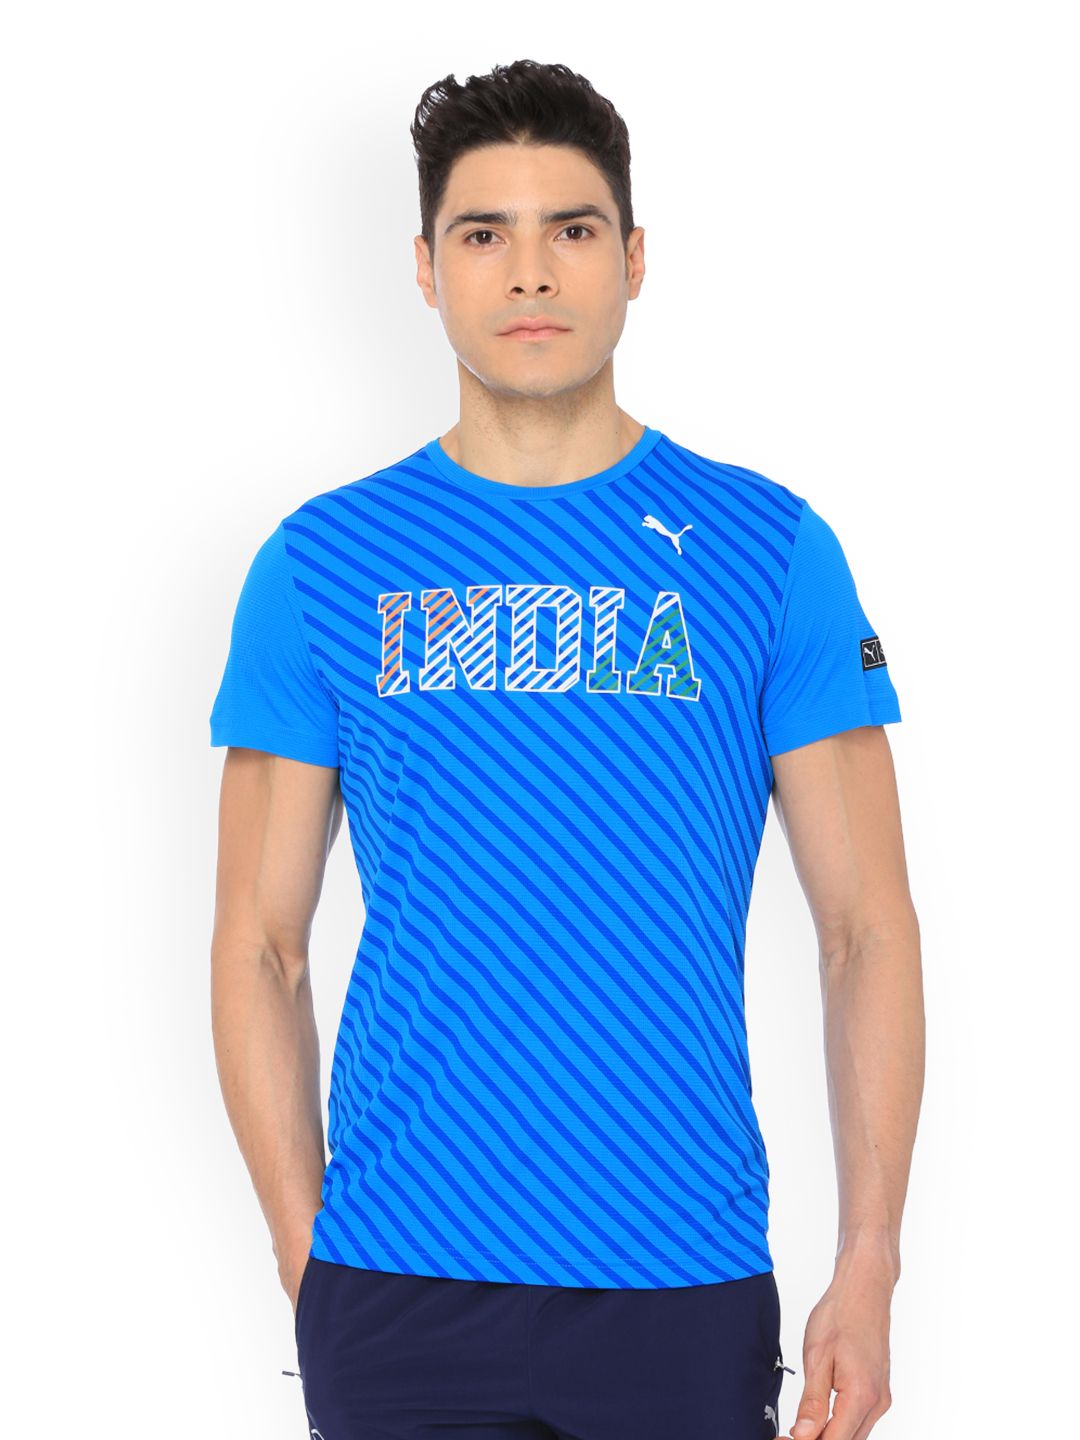 Puma Unisex Blue Printed Round Neck one8 T-shirt Price in India